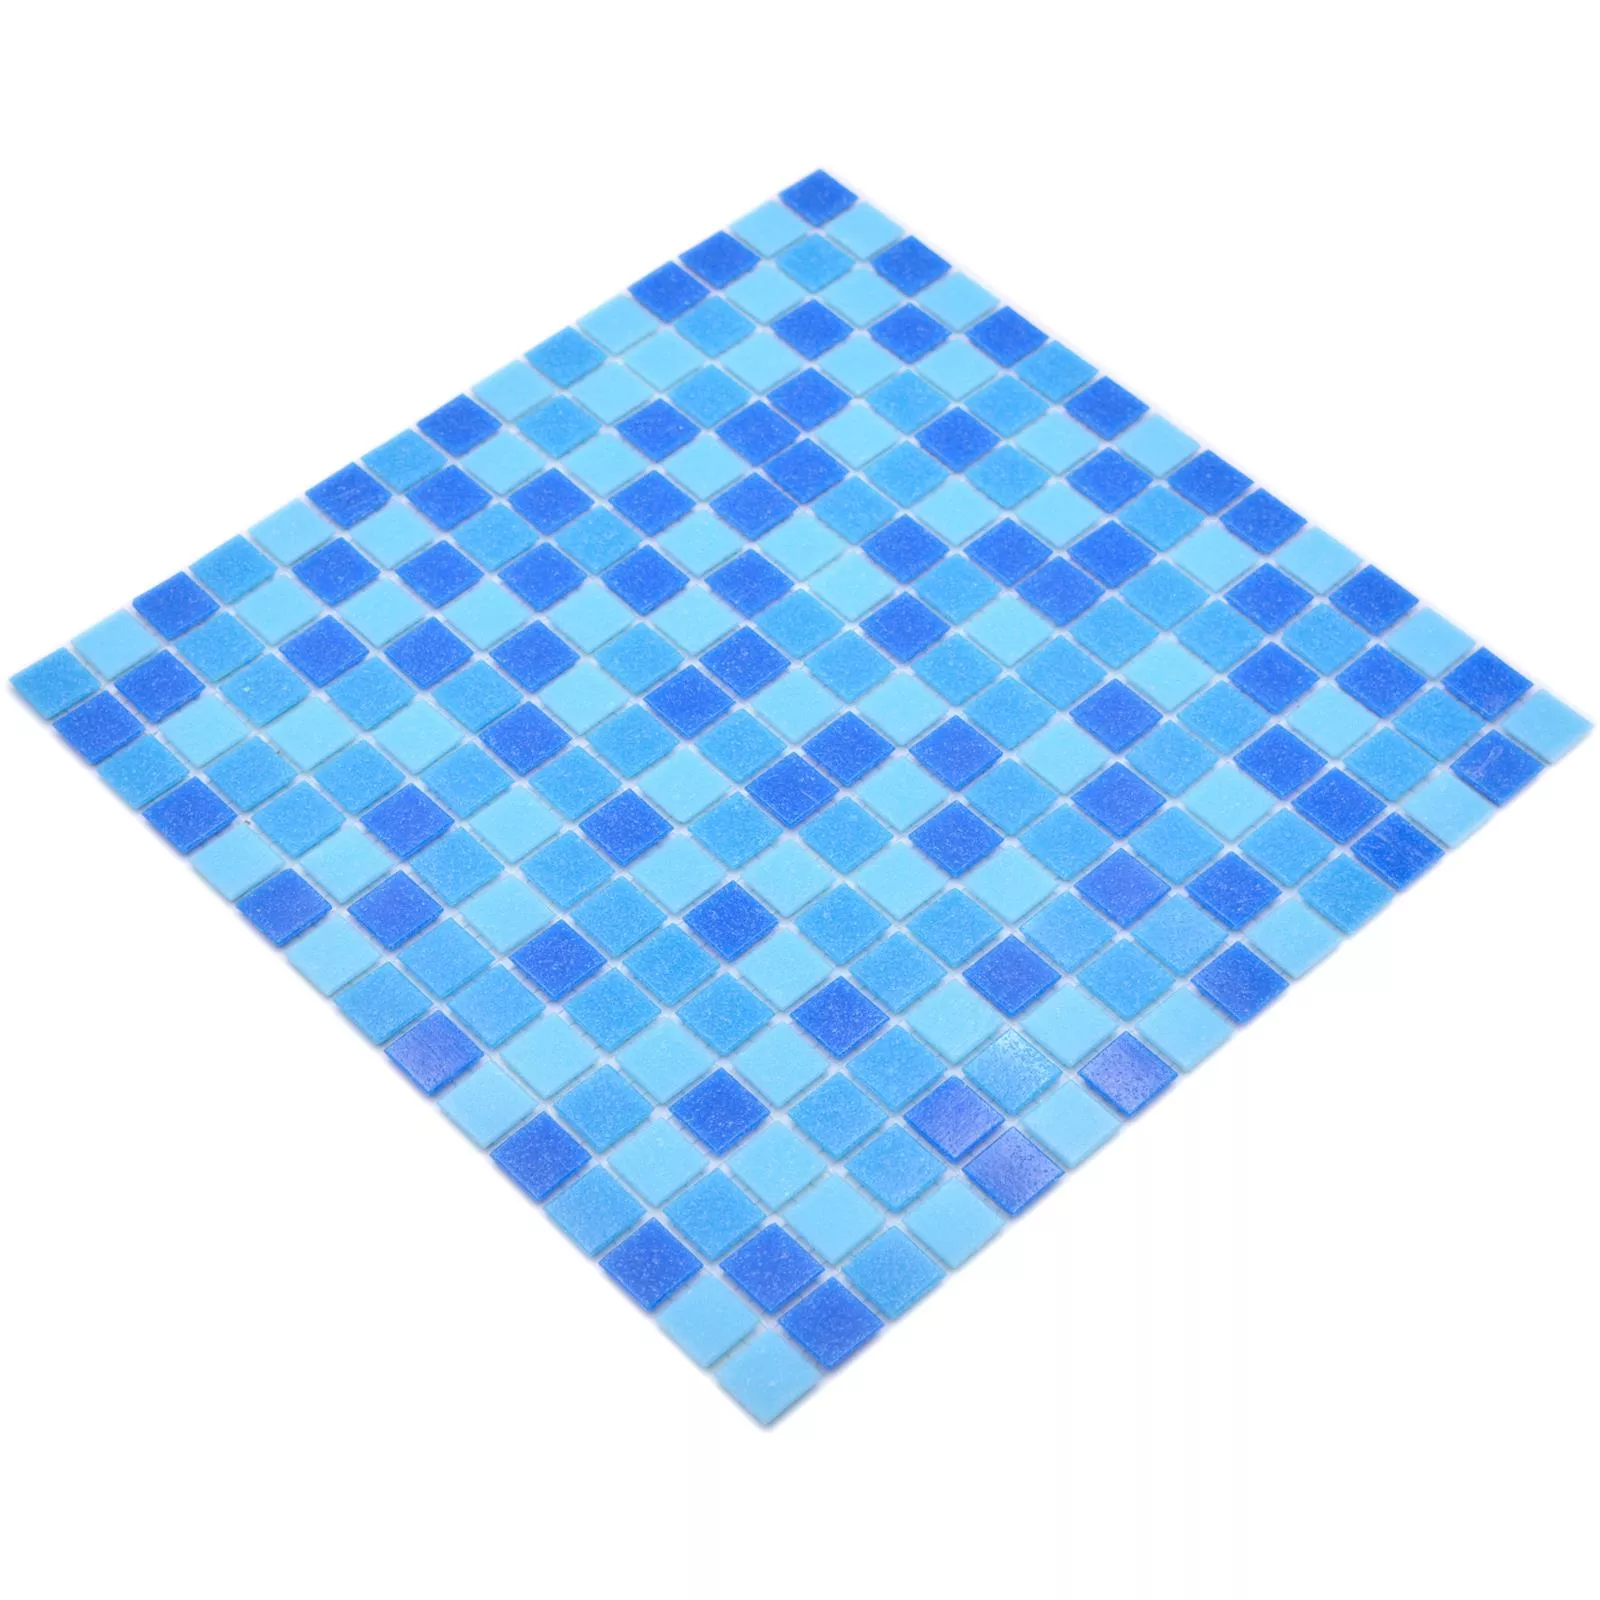 Schwimmbad Pool Mosaik North Sea Blau Türkis Mix